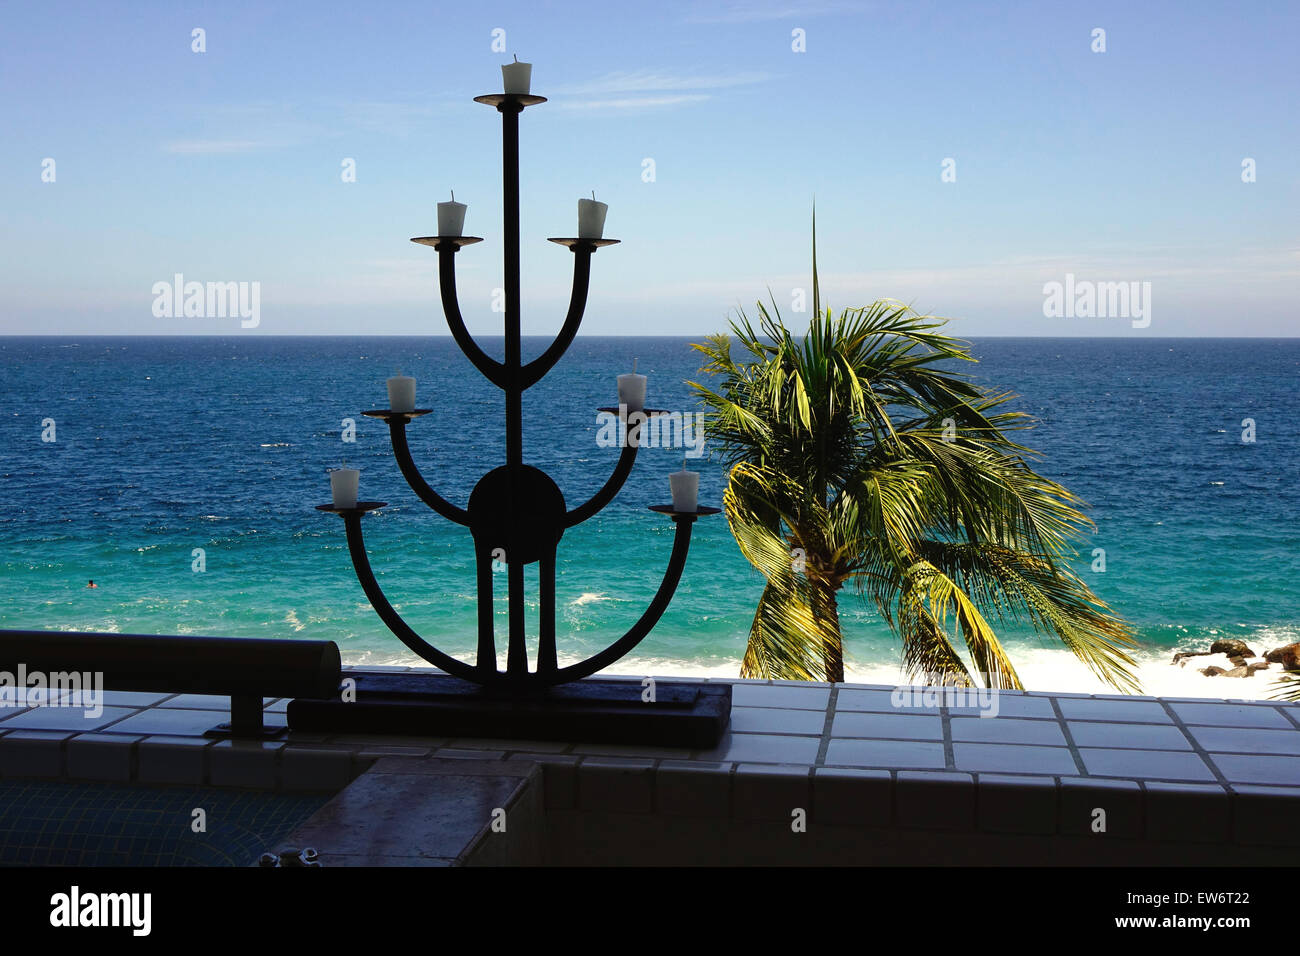 Ocean view from hotel, Villa Premiere, candelabra in foreground. Puerto Vallarta, Mexico Stock Photo